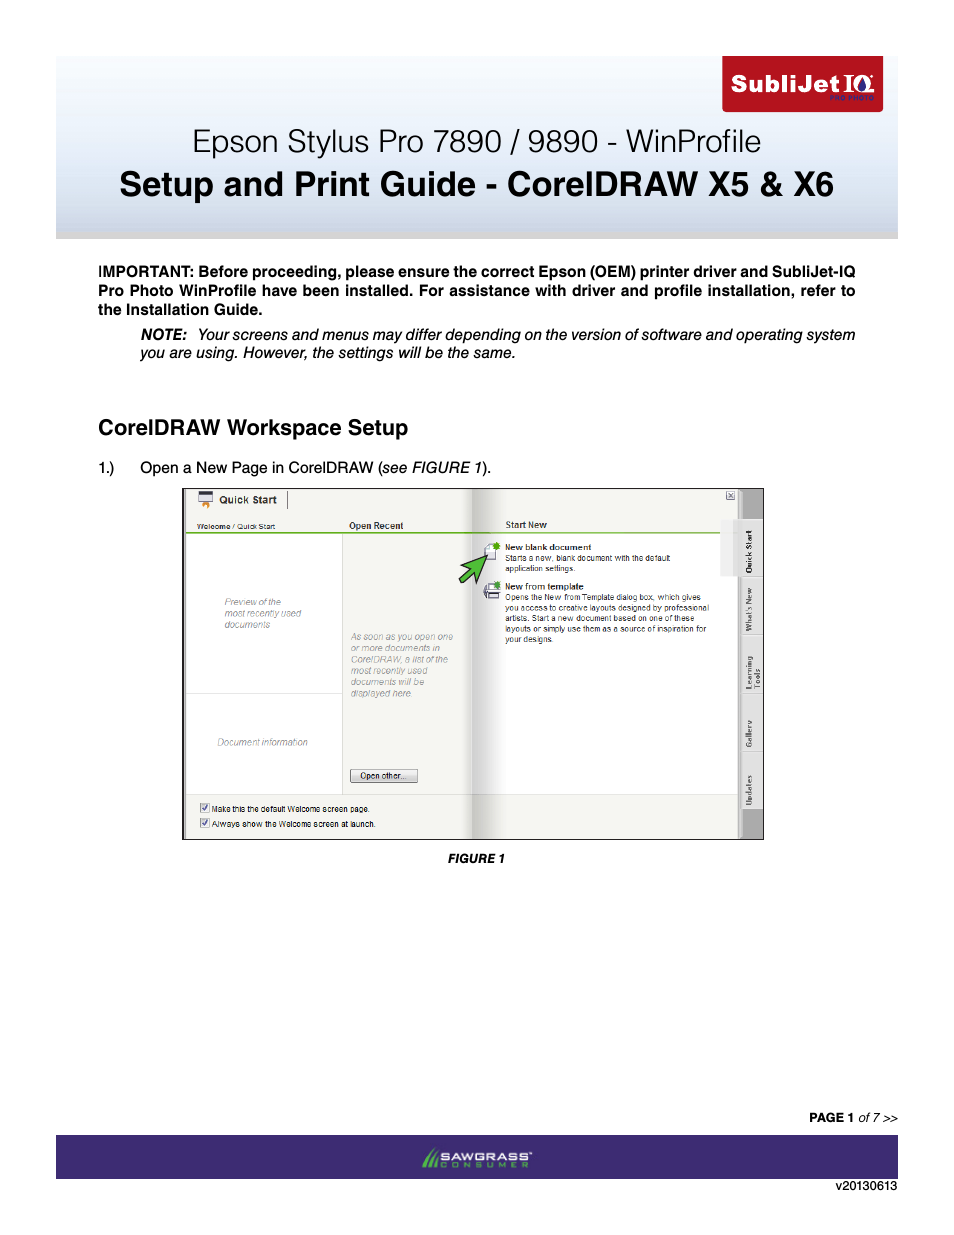 SubliJet IQ Epson Stylus Pro 9890 - IQ Pro Photo (Windows ICC Profile Setup): Print & Setup Guide CorelDRAW X5 - X6